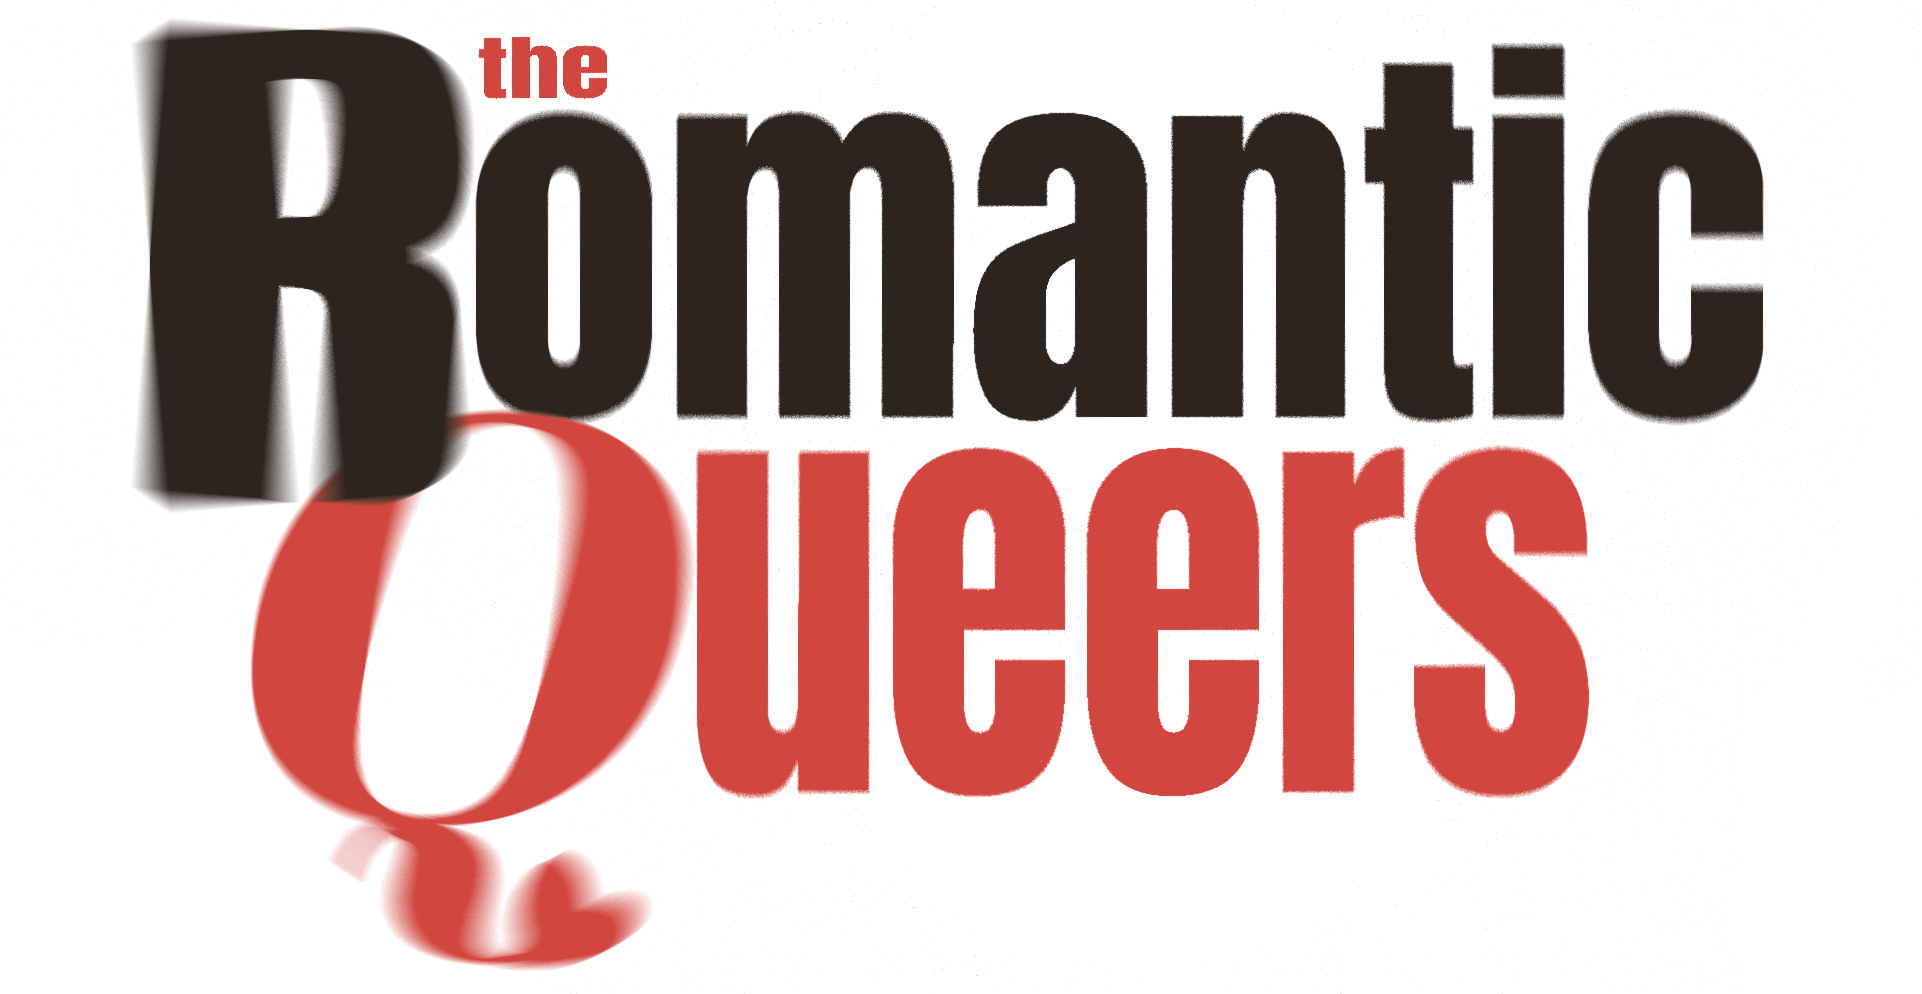 The Romantic Queers